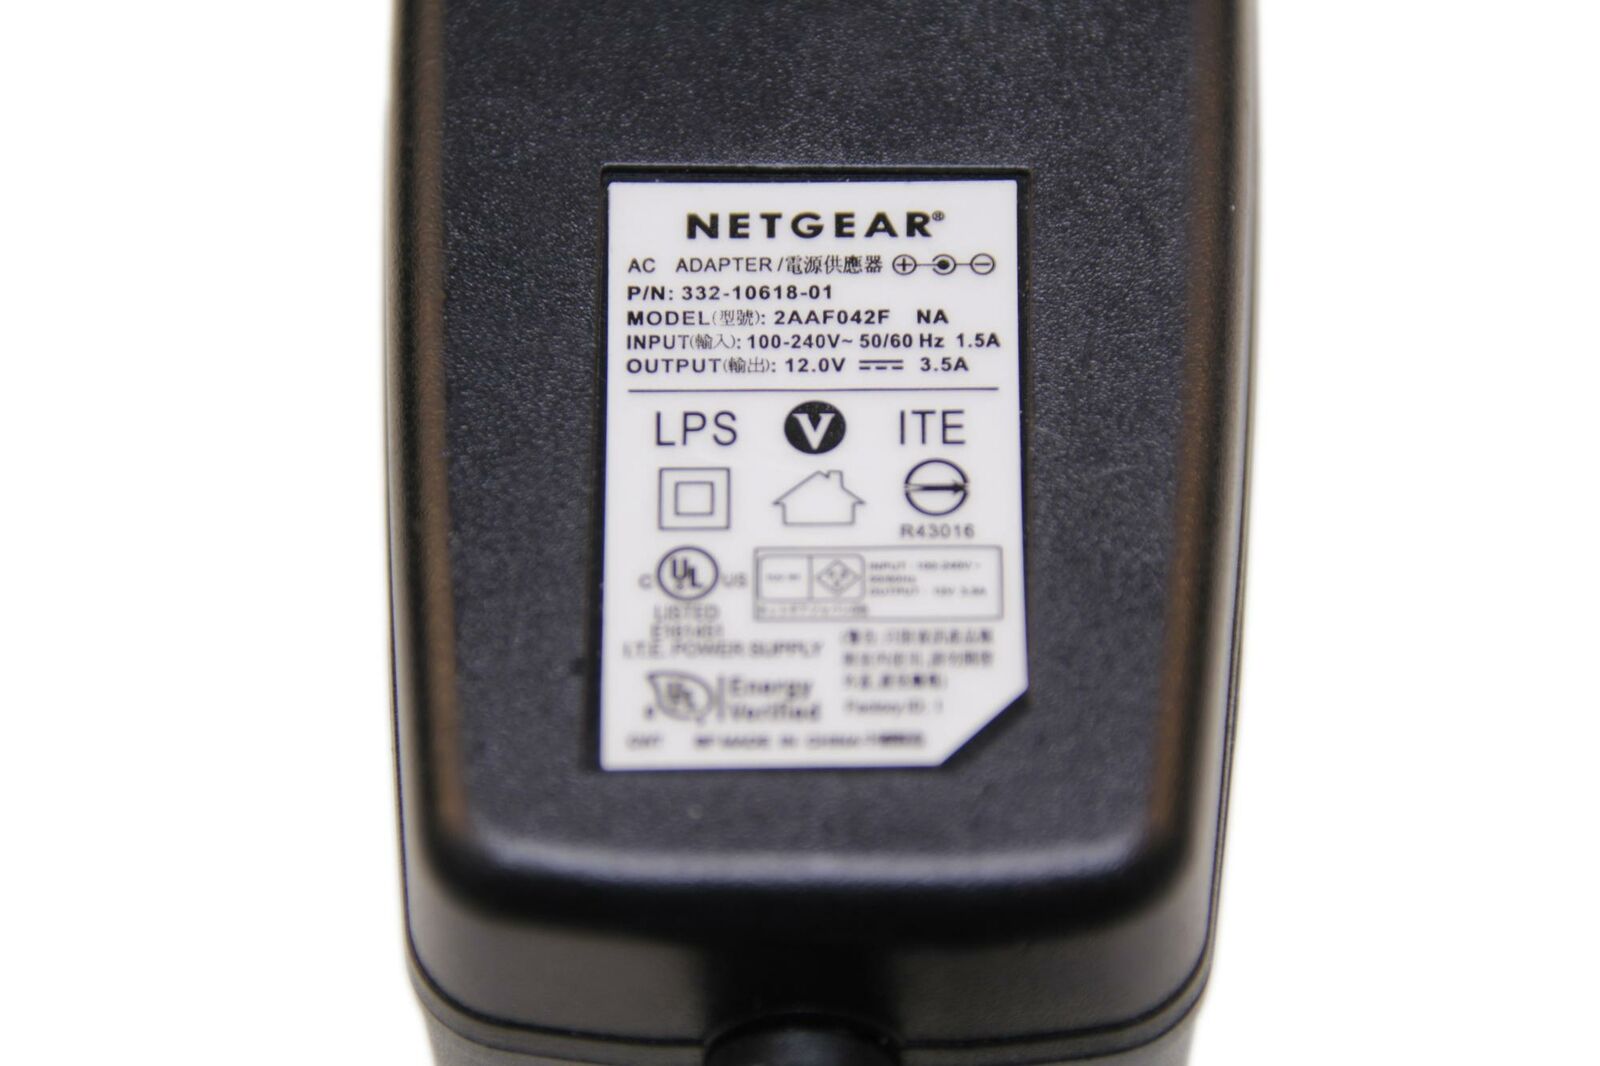 *Brand NEW*Netgear Nighthawk Pro Gaming Router ( XR450 ) AC Adapter